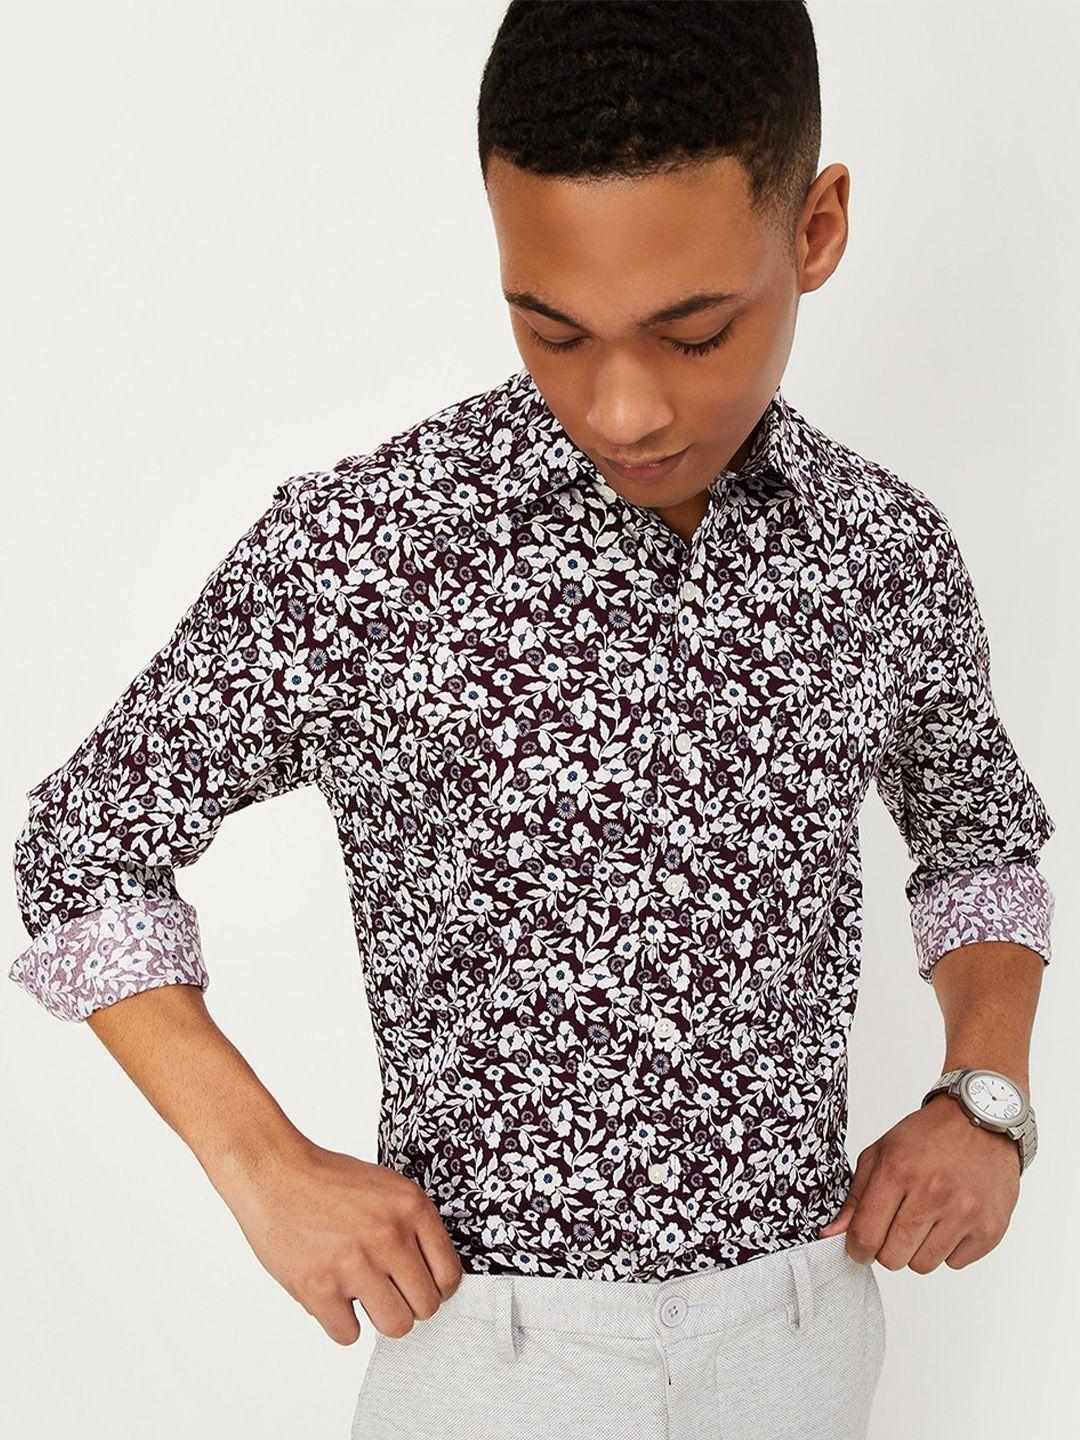 max-men-floral-printed-pure-cotton-casual-shirt